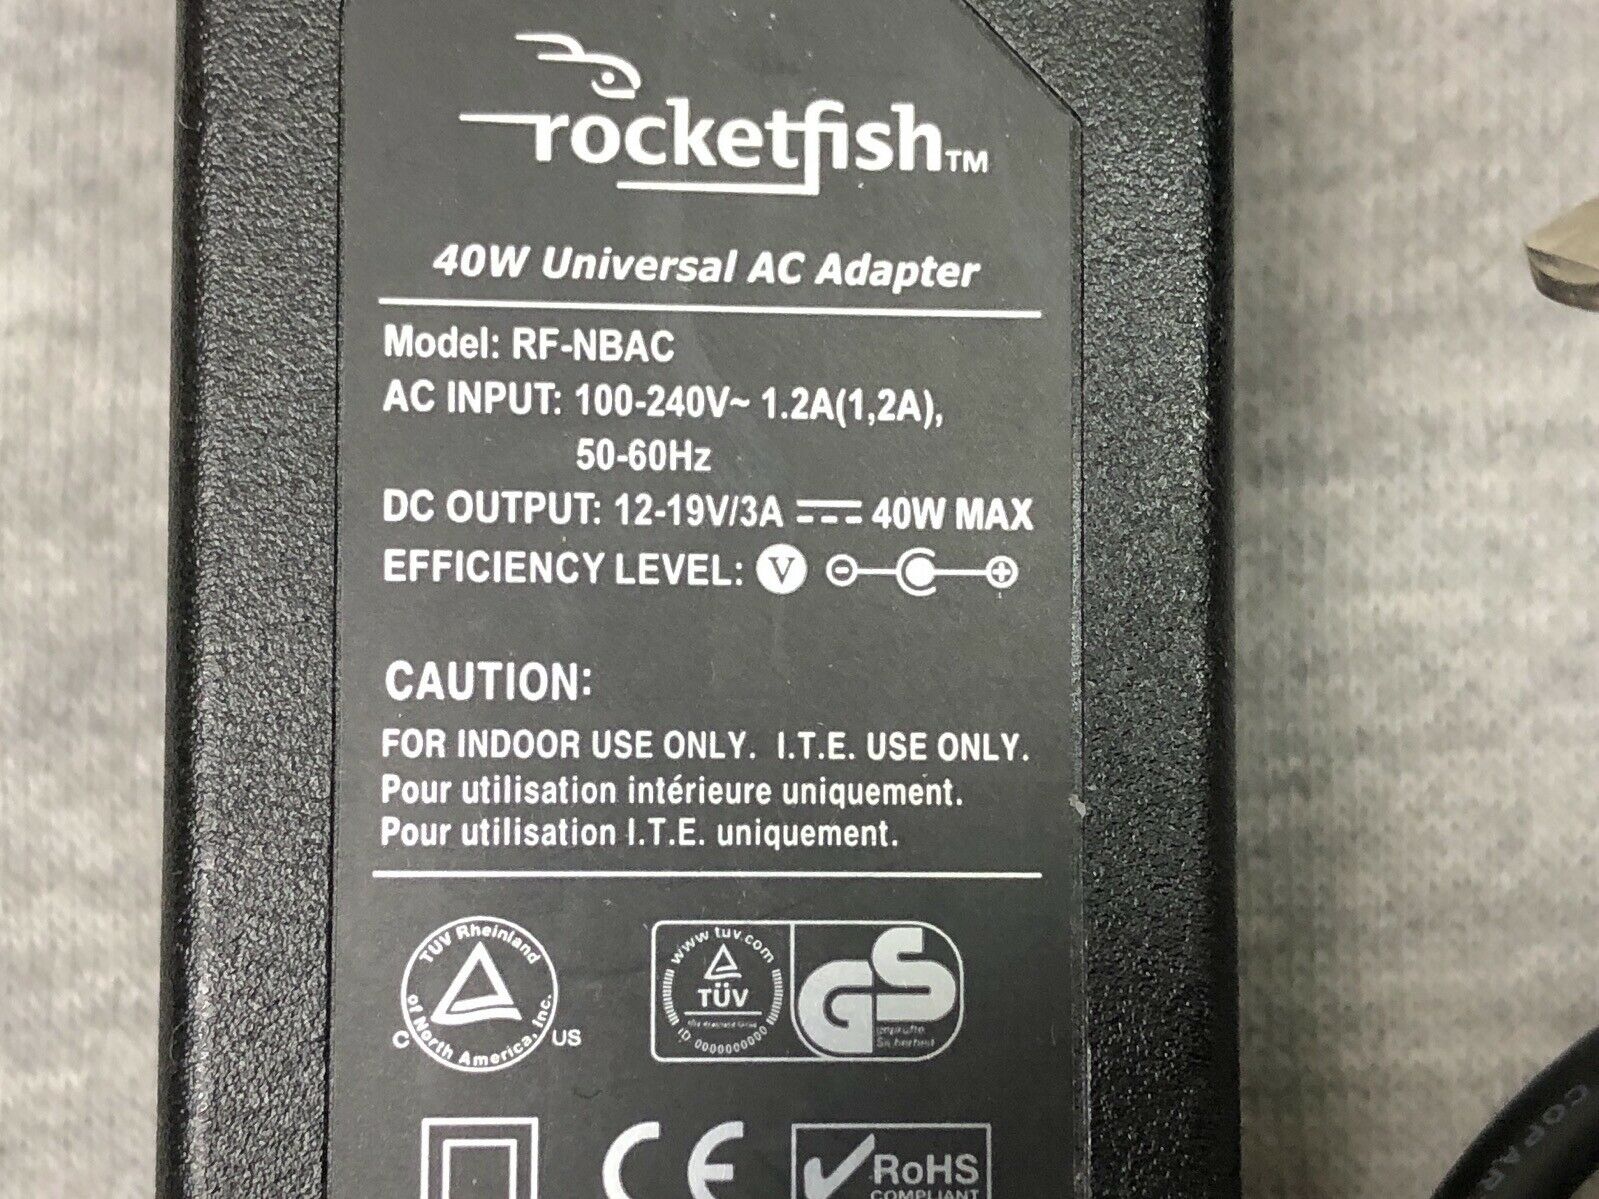 Rocketfish Model RF-NBAC 40W Universal AC Adapter Output DC 12-19V 3A Brand: Rocketfish Type: AC/DC Adapter UPC: Do